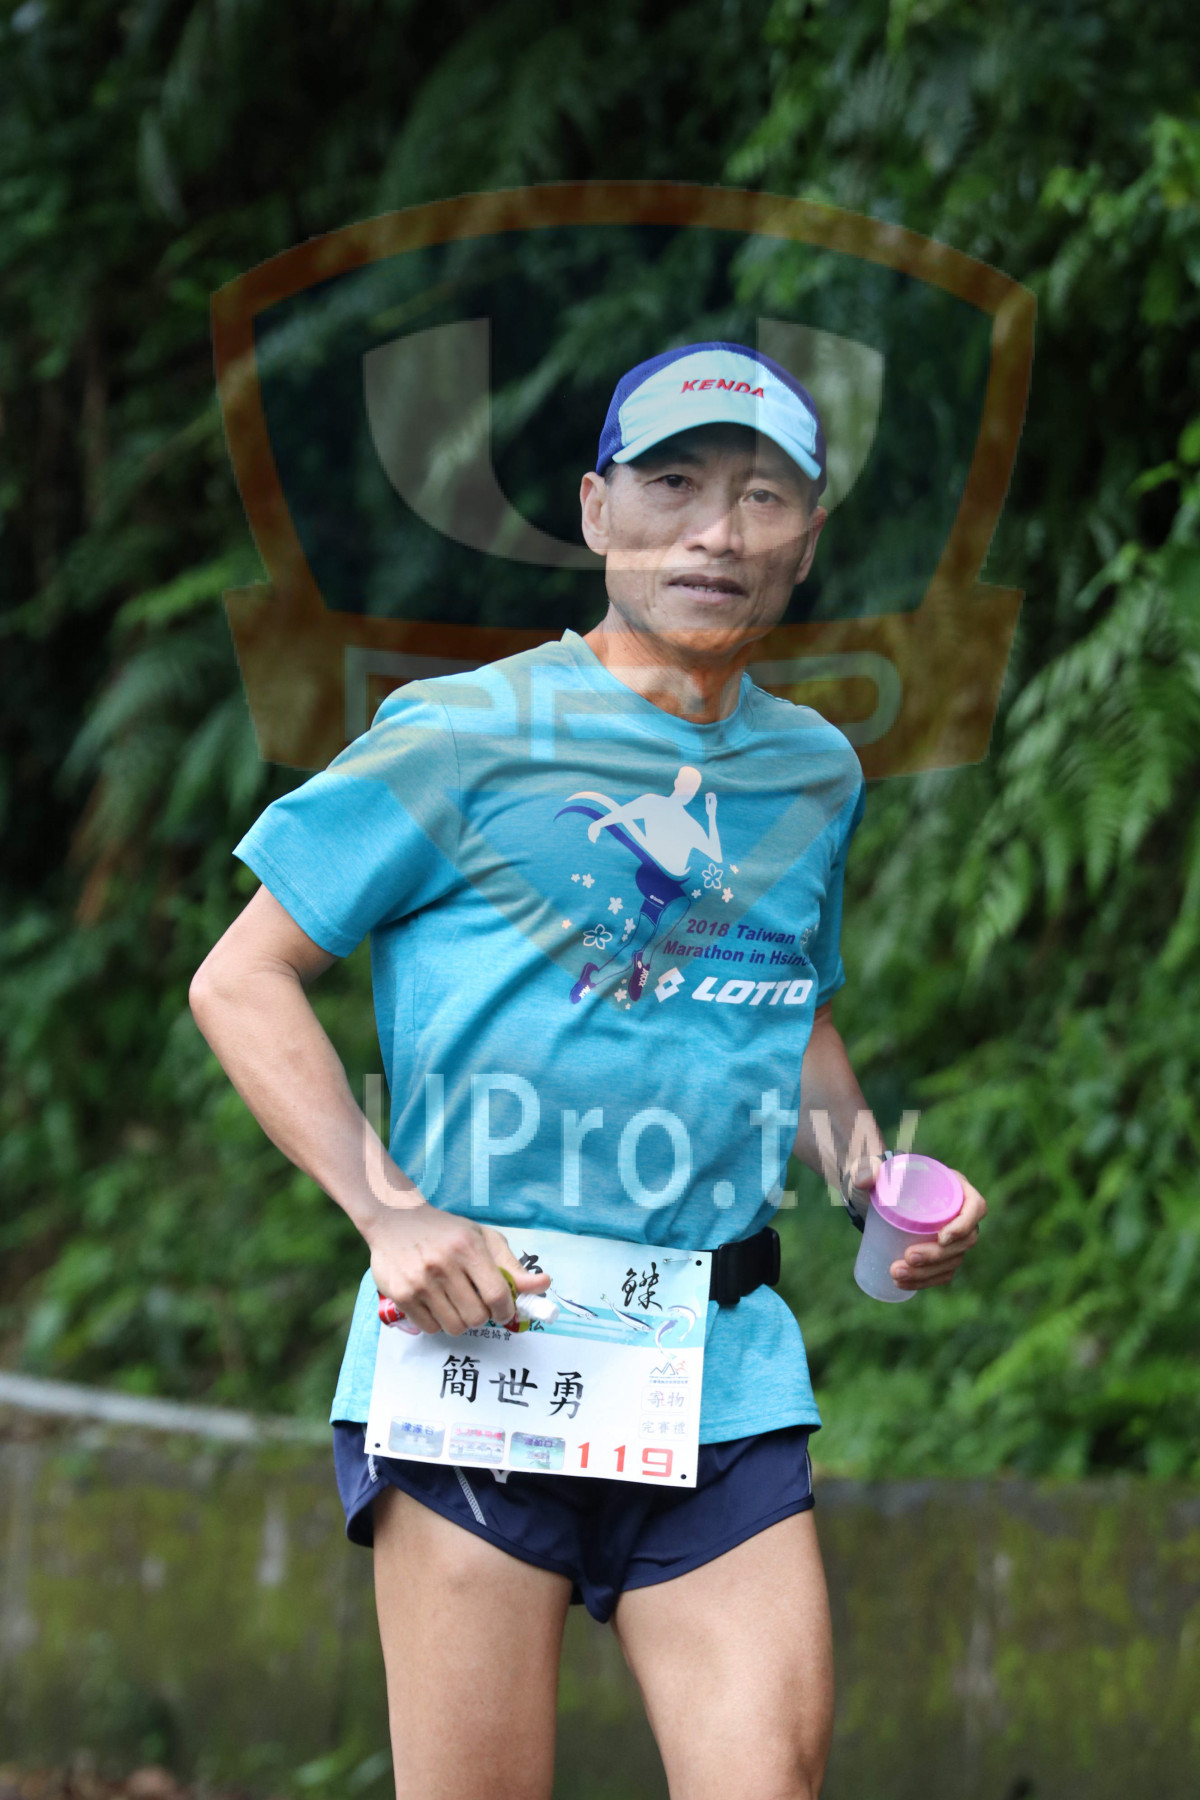 2018 Talwan,Marathon in Hsin,|